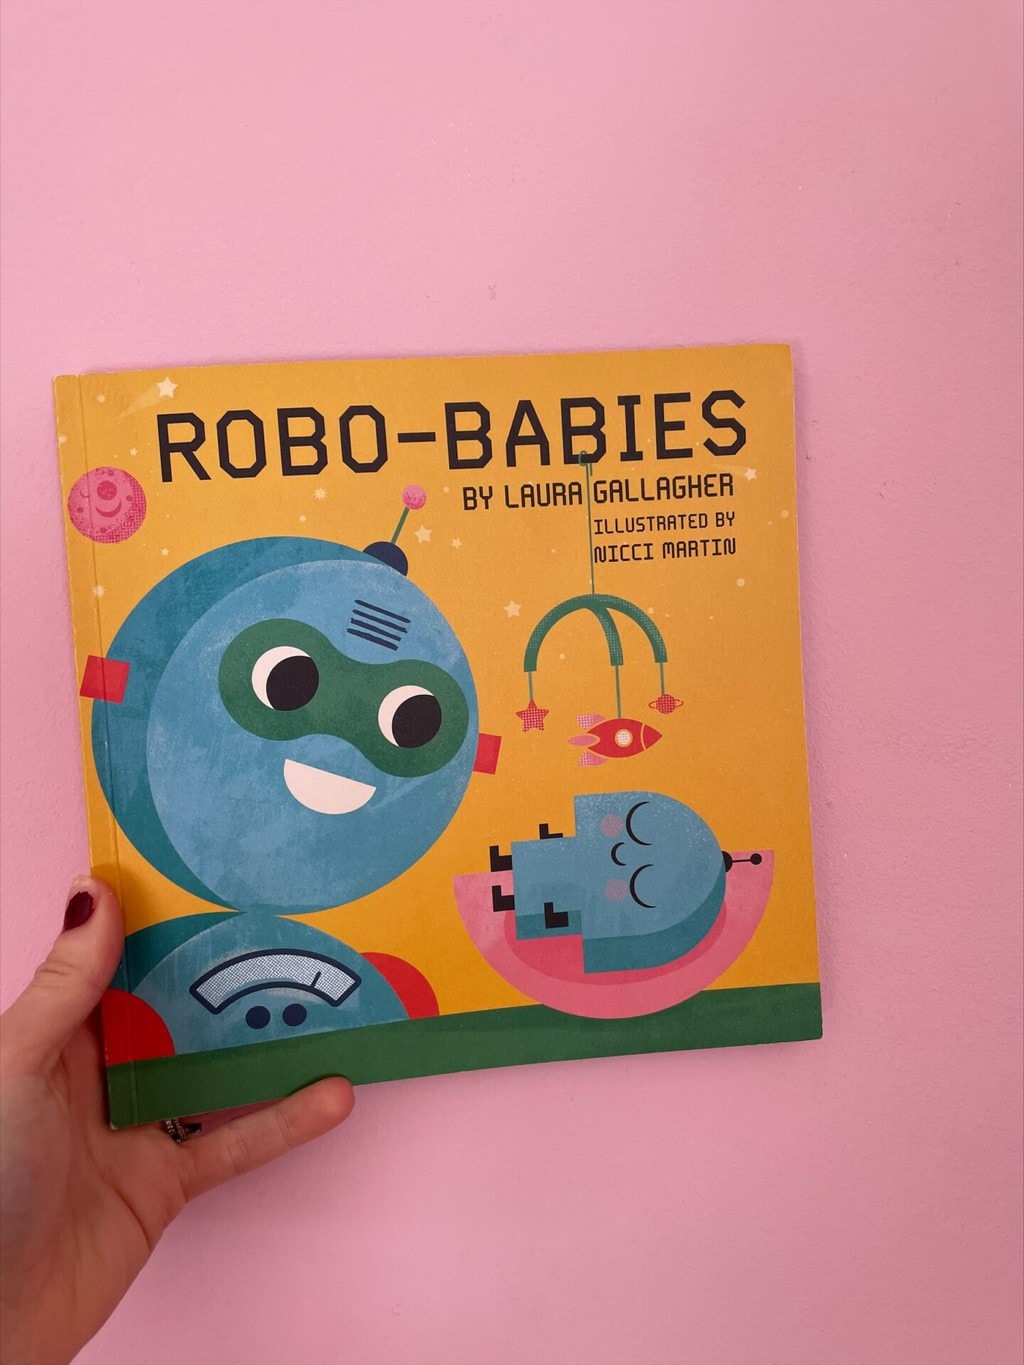 bo-Babies – Laura Gallagher (author), Nicci Martin (illustrator), Owlet Press (publisher)